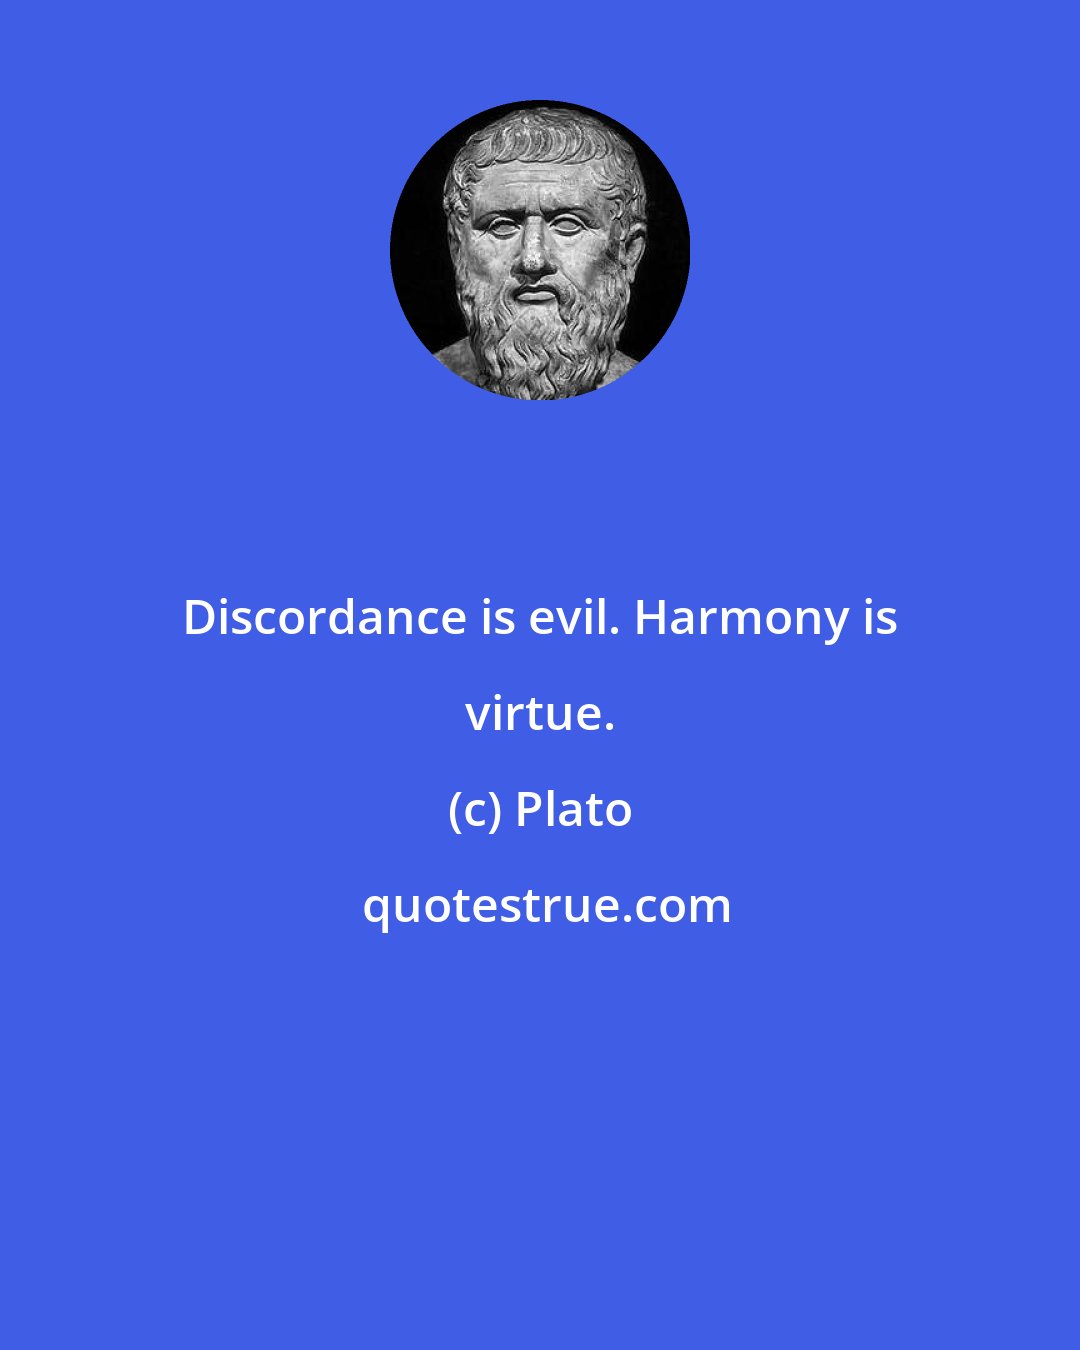 Plato: Discordance is evil. Harmony is virtue.